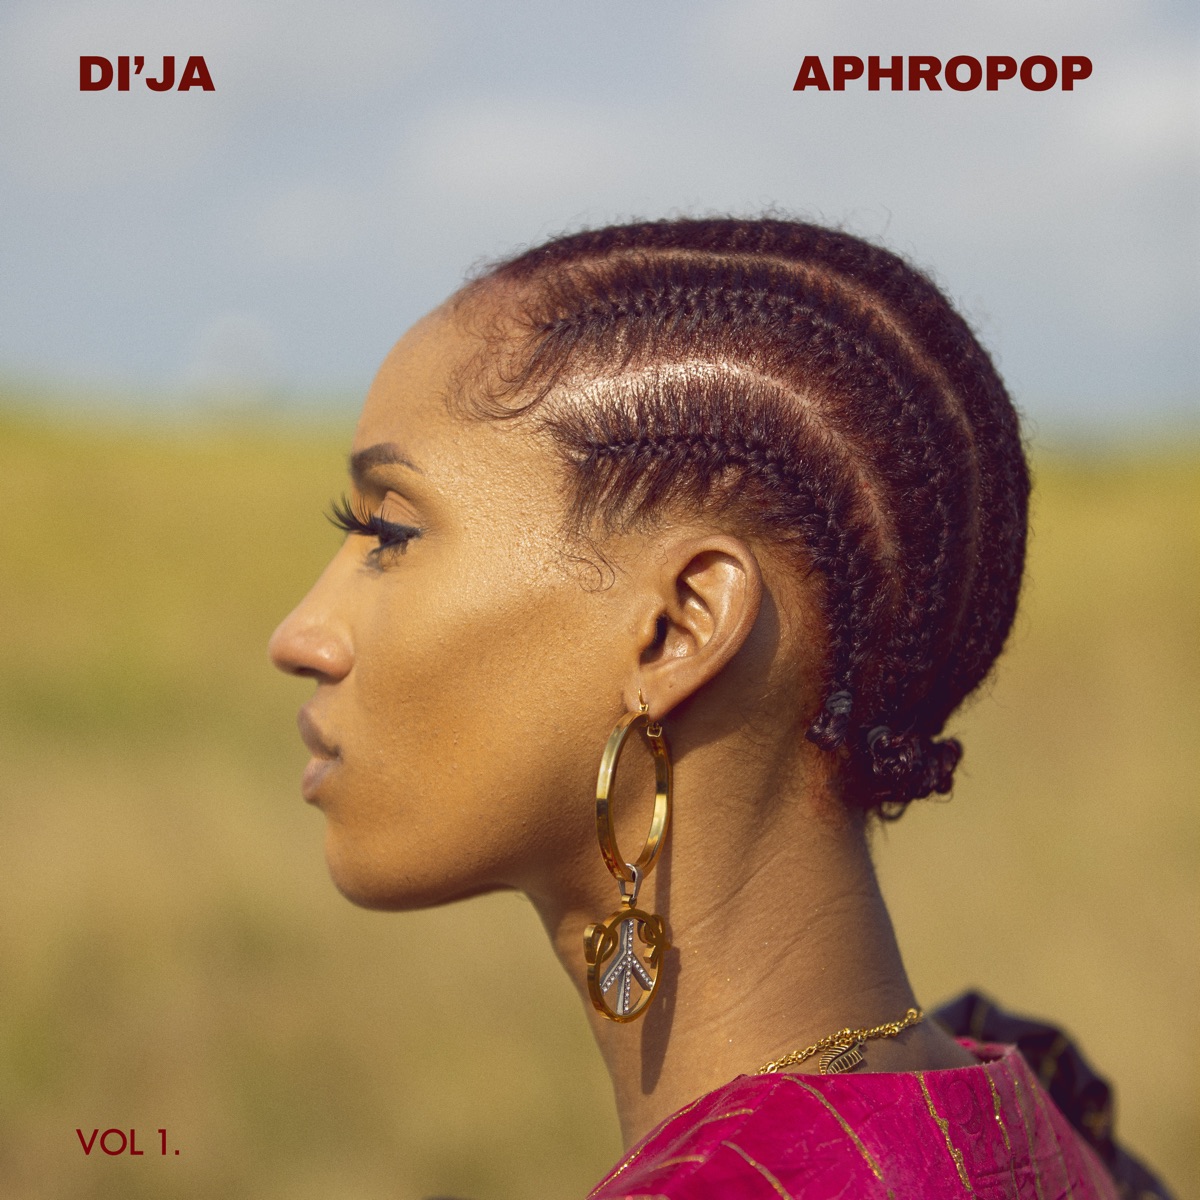 Aphrodija by Di'Ja on Apple Music